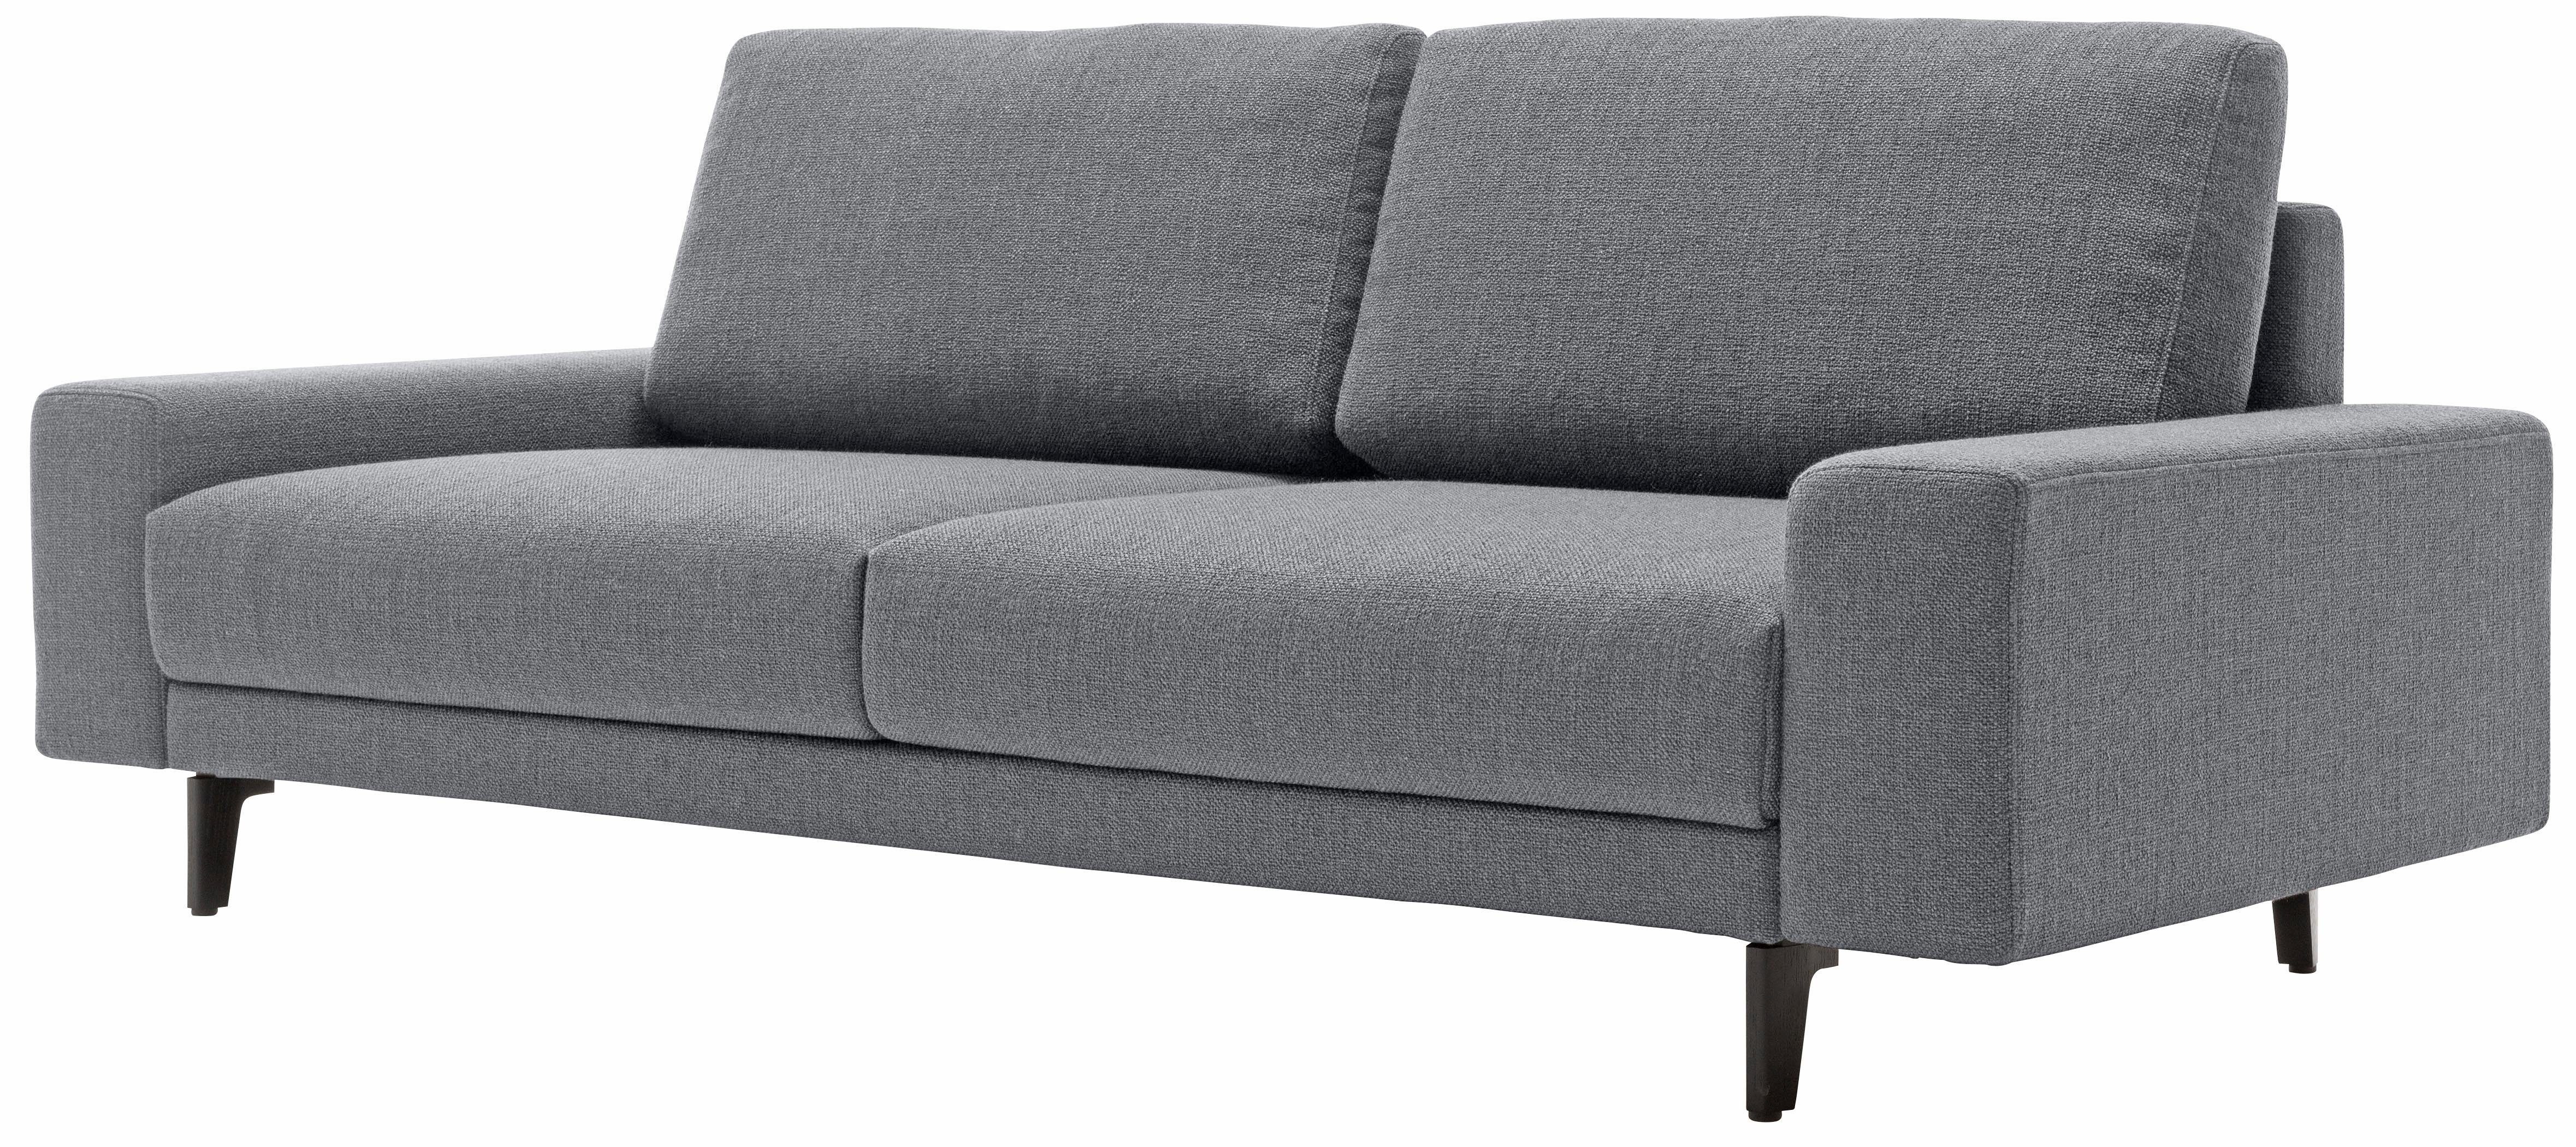 hülsta sofa 2-Sitzer hs.450, in cm Alugussfüße Breite umbragrau, niedrig, 180 Armlehne breit